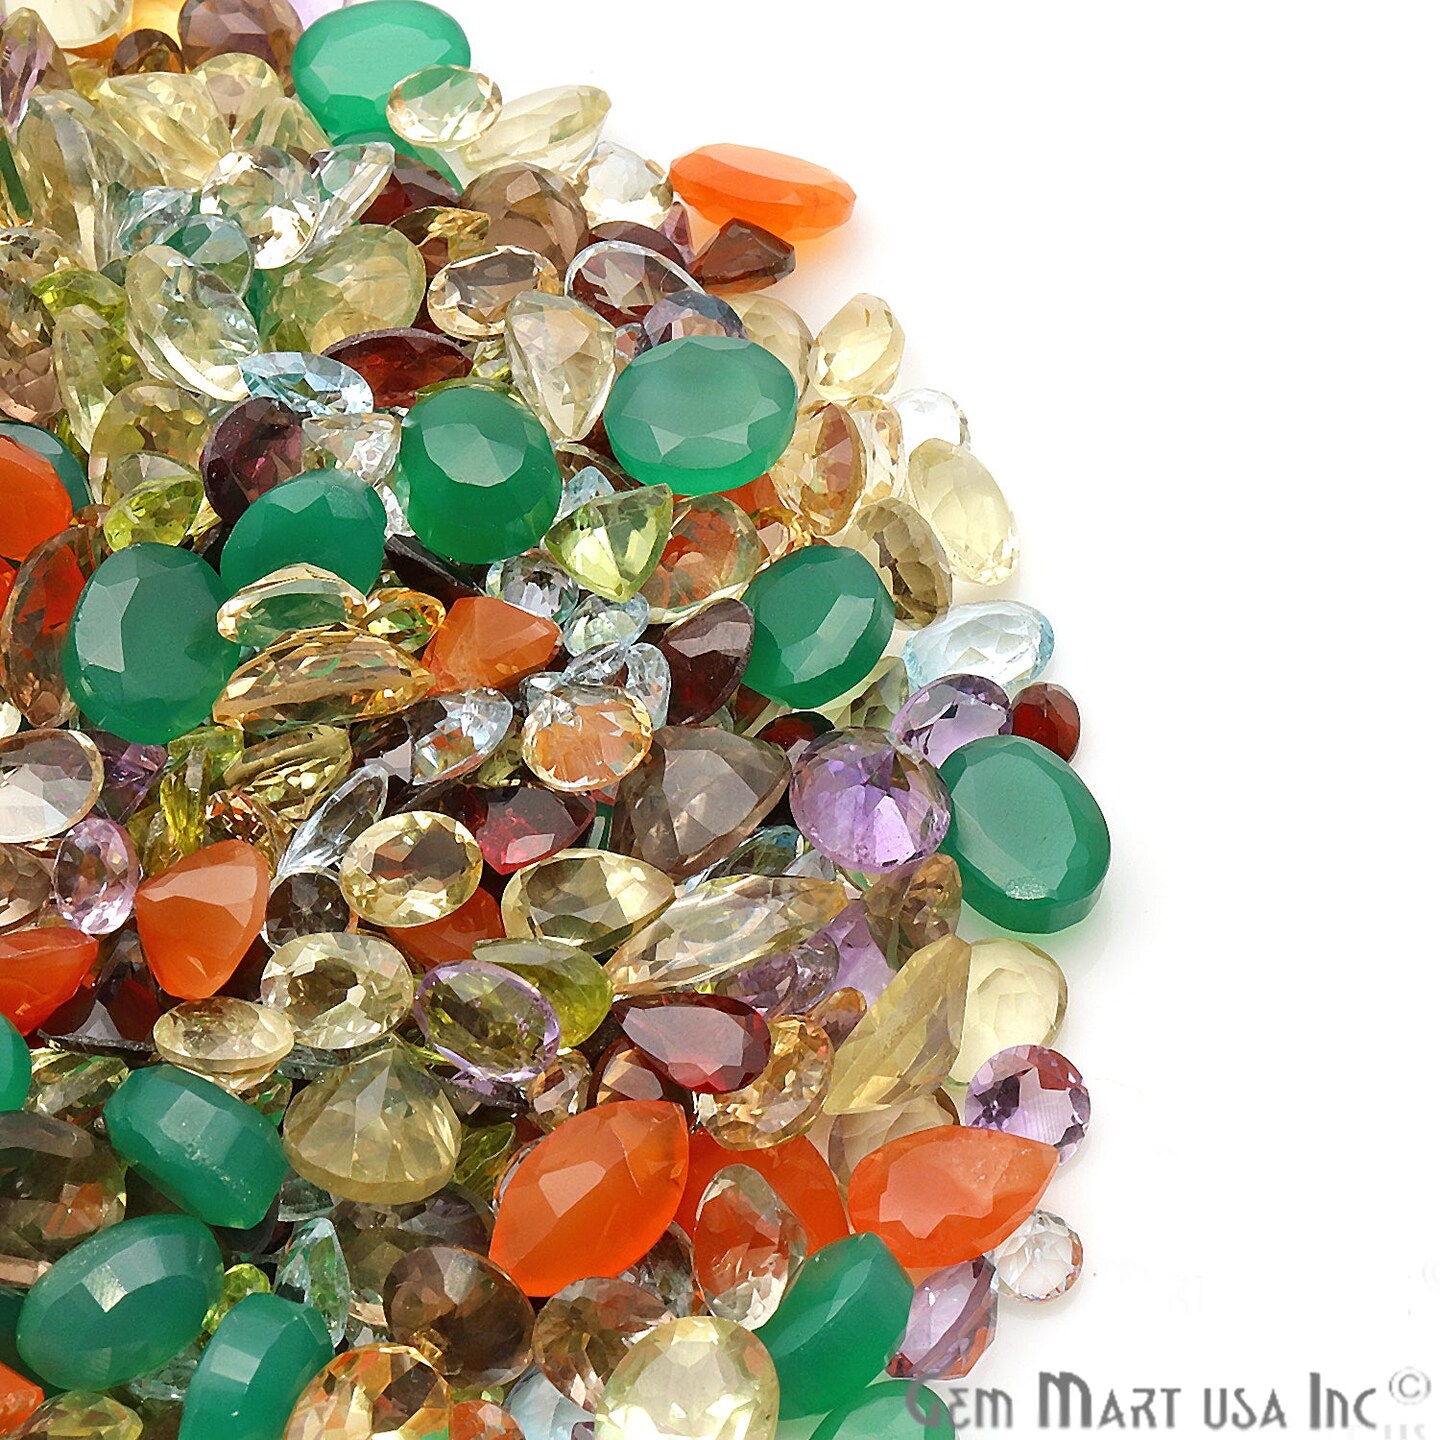 Mix Gemstone, 100% Natural Faceted Loose Gems, Wholesale Gemstones, 6-12mm, 50 Carats, GemMartUSA (MX-60001-50)